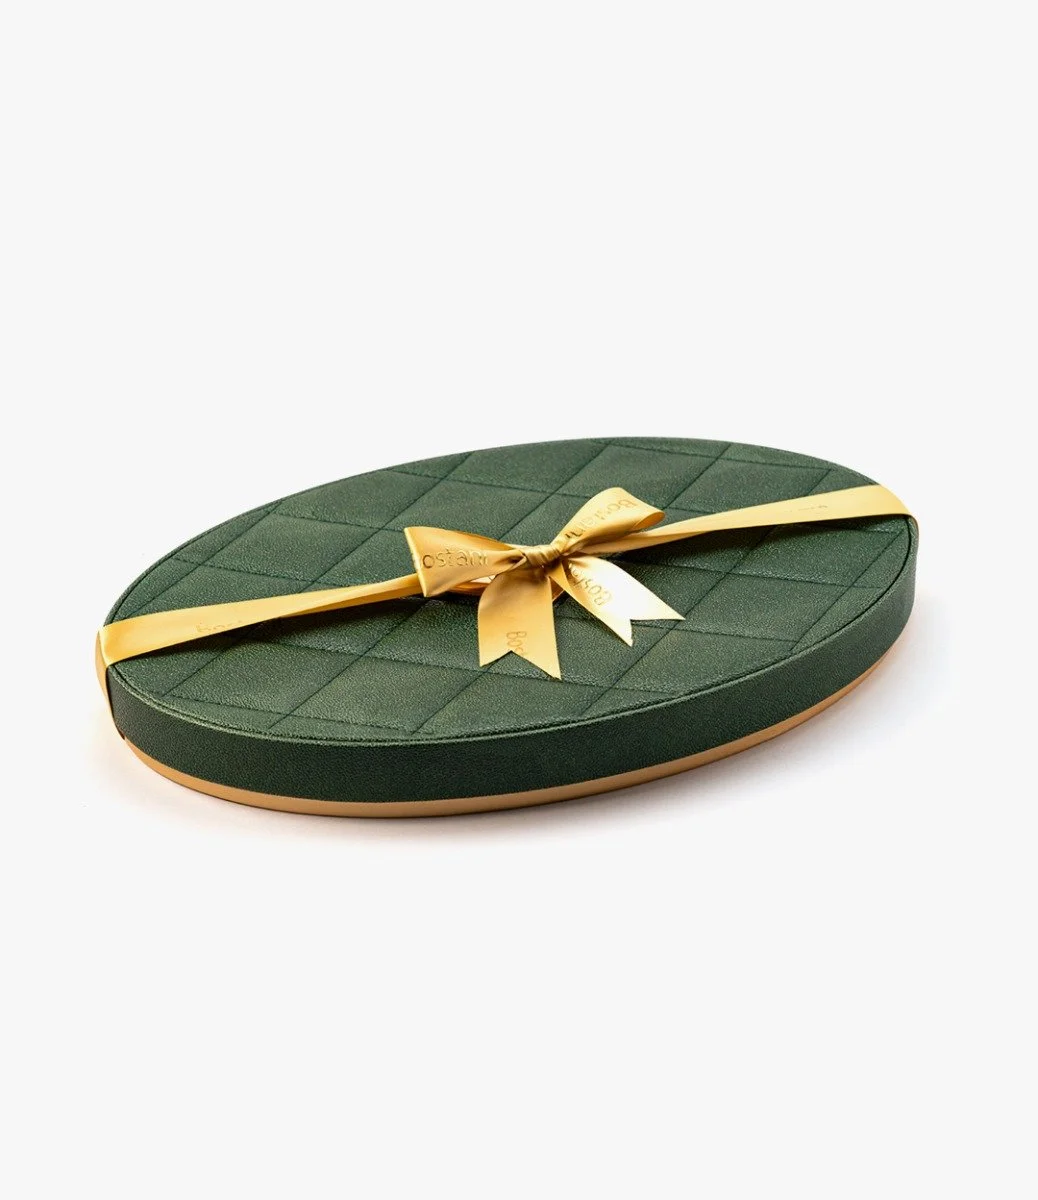 Oval Green Luxury Box By Bostani  - Big